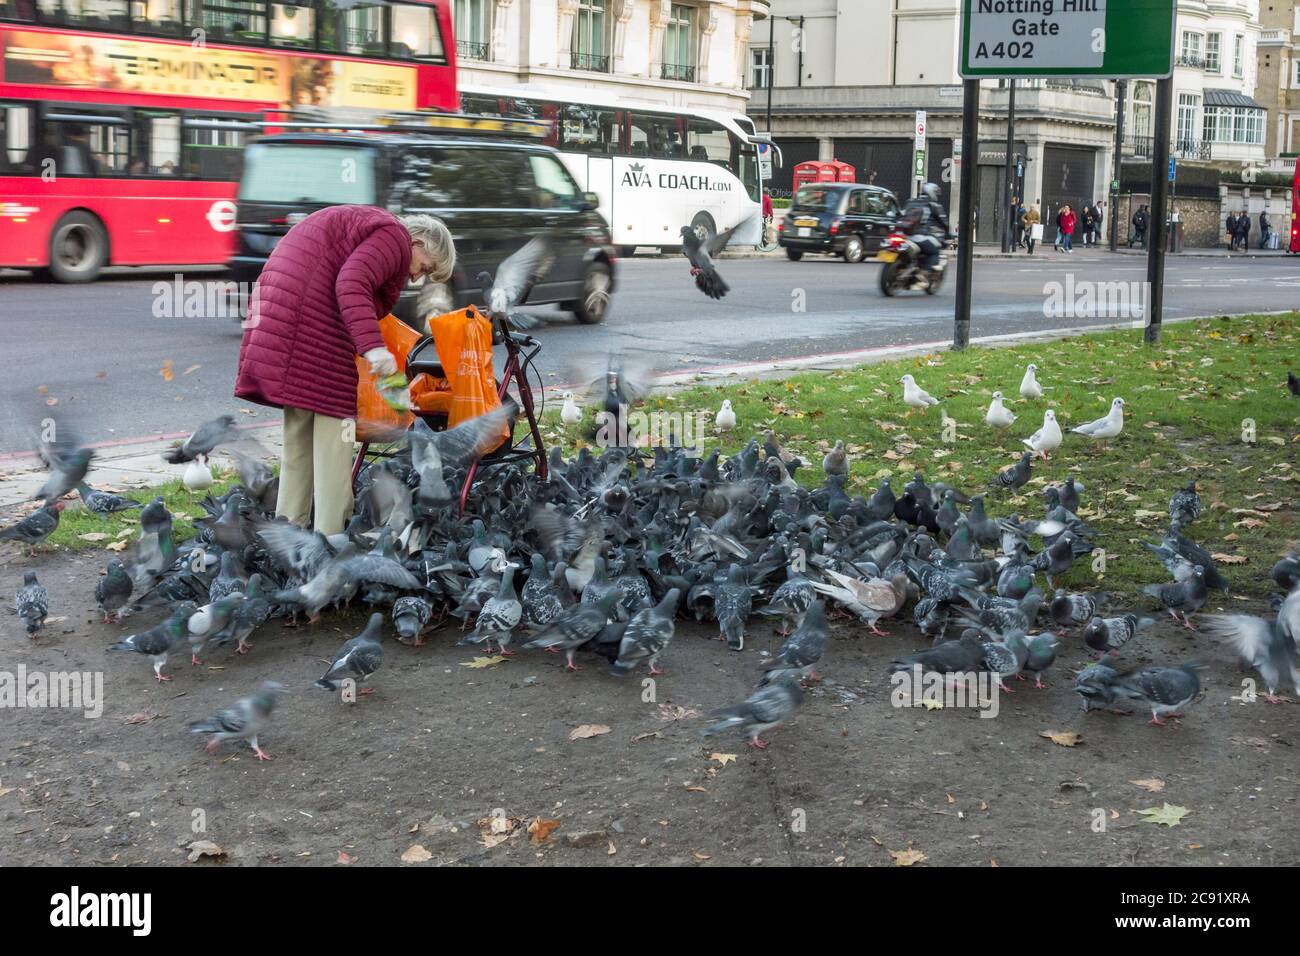 Old lady feeding pigeons in street of London, UK Stock Photo